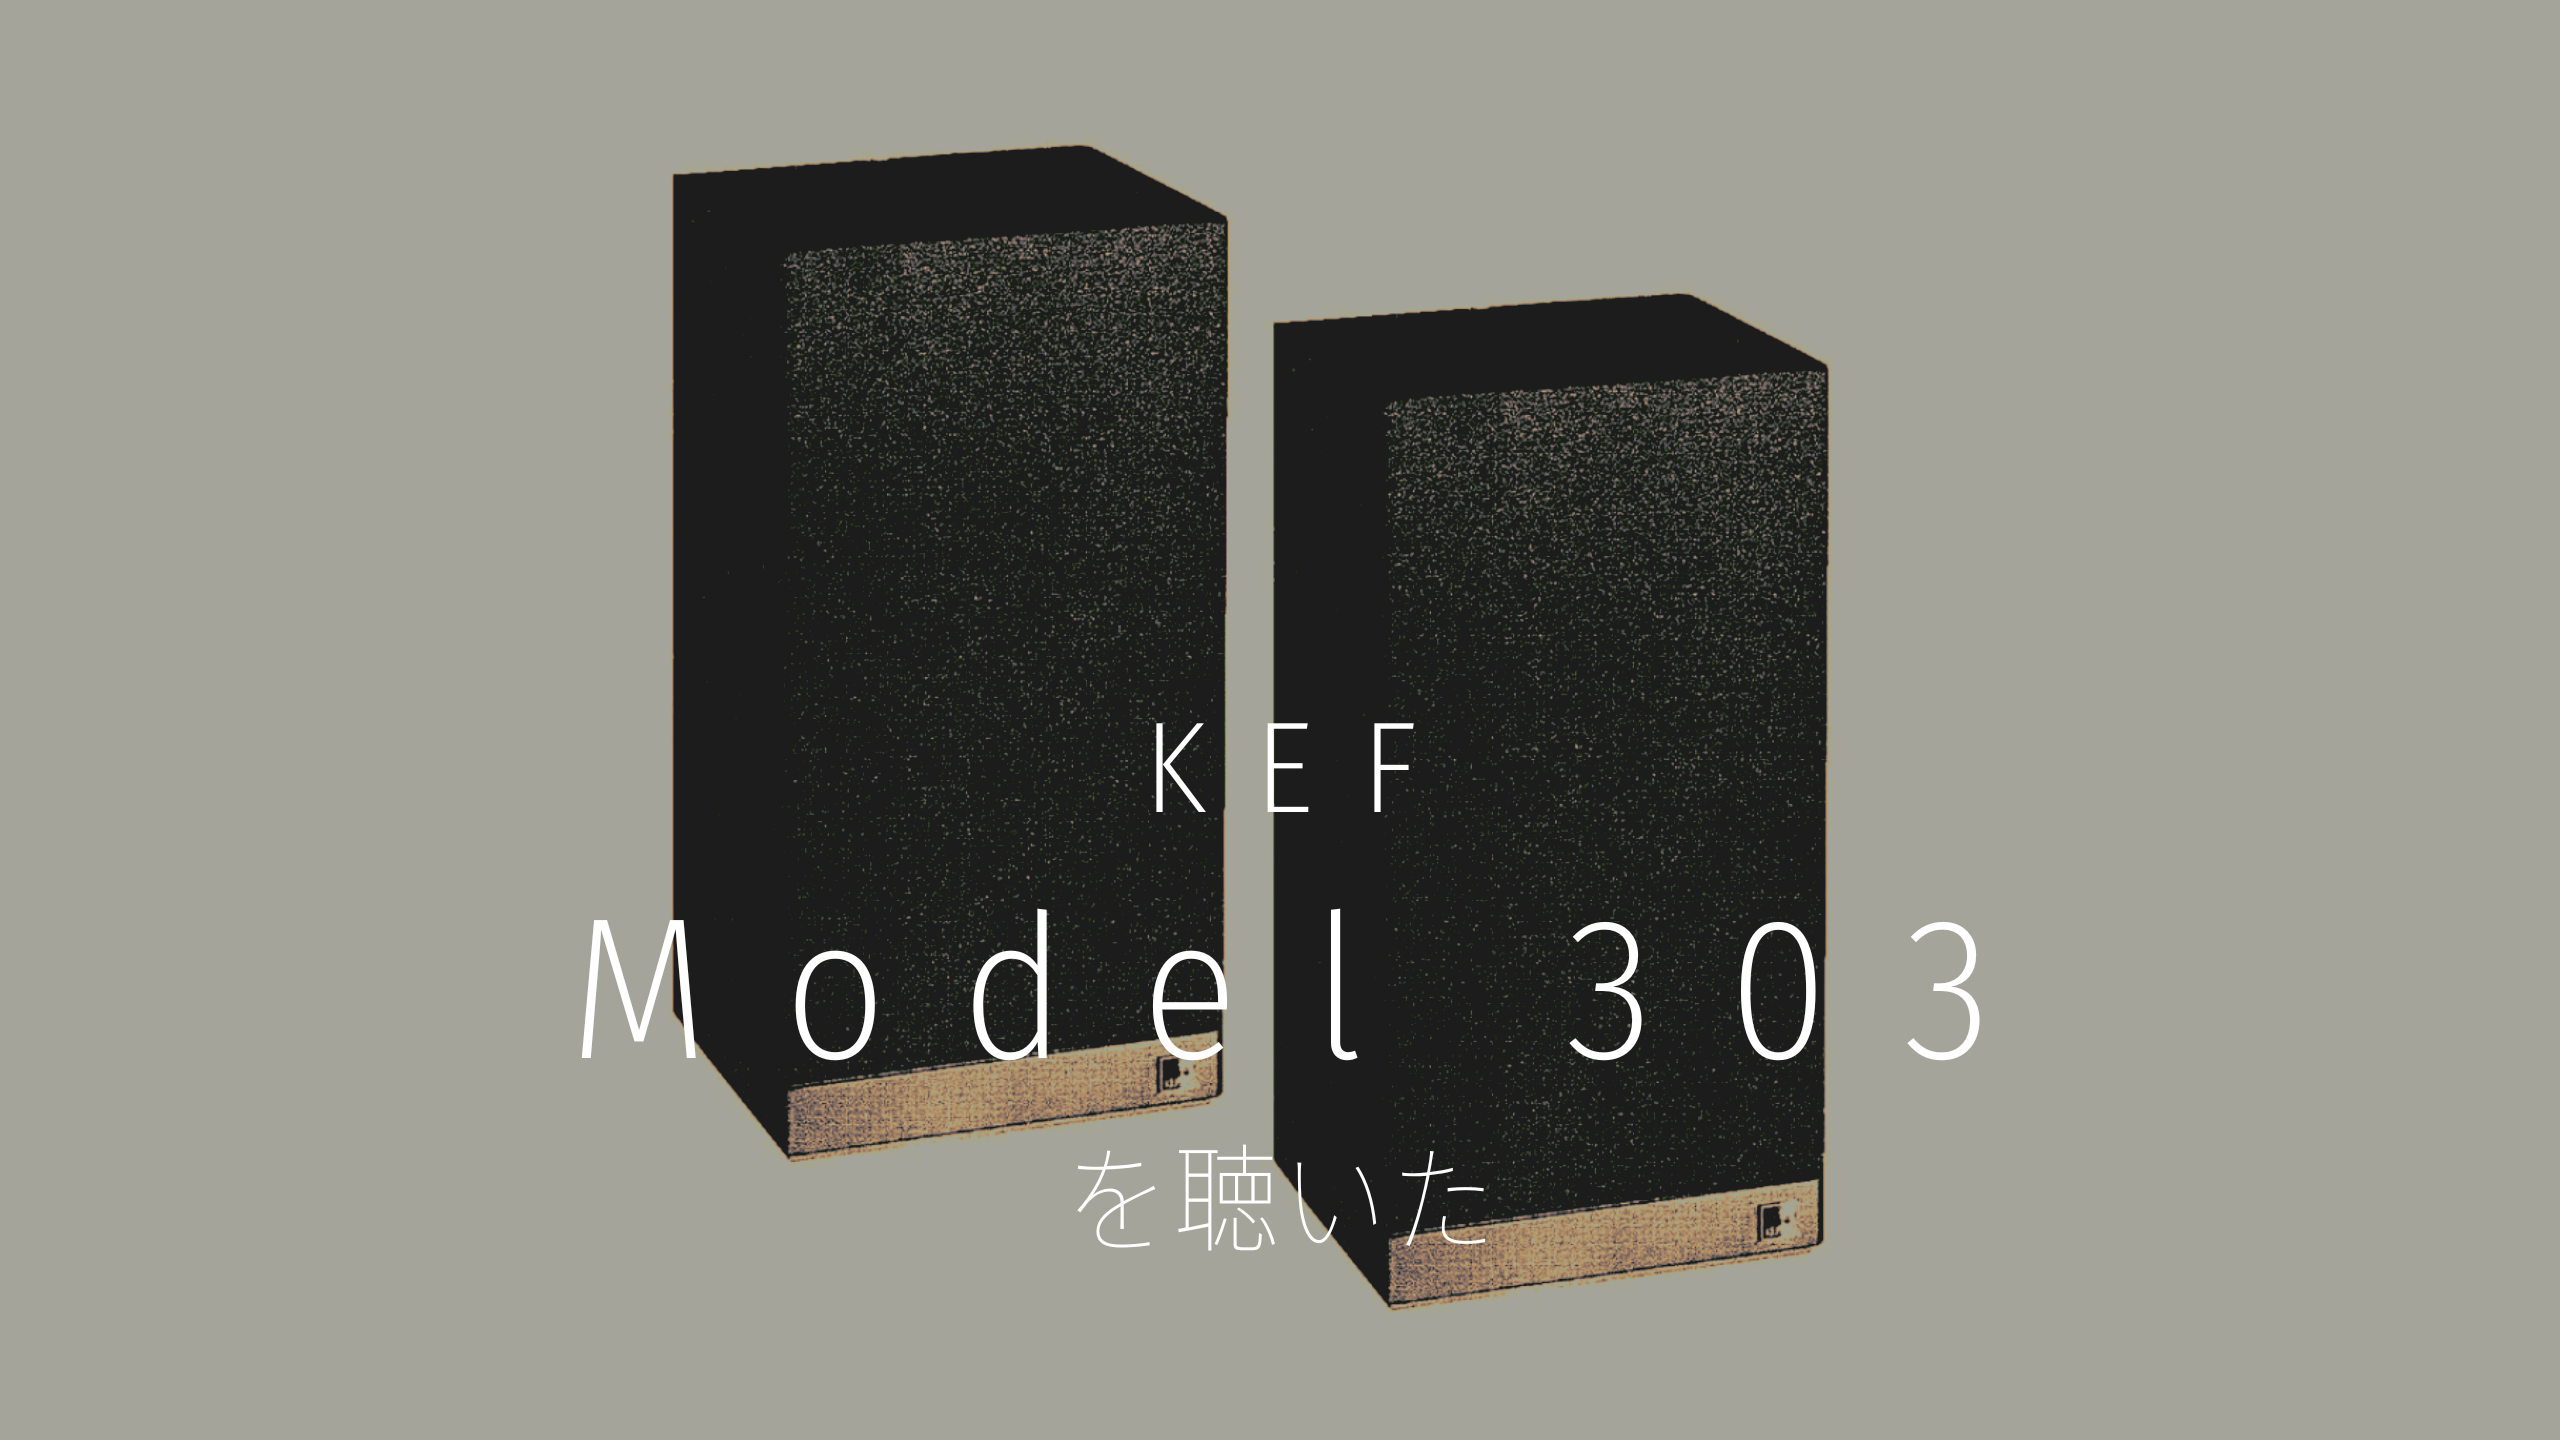 KEF Model 303 を聴いた